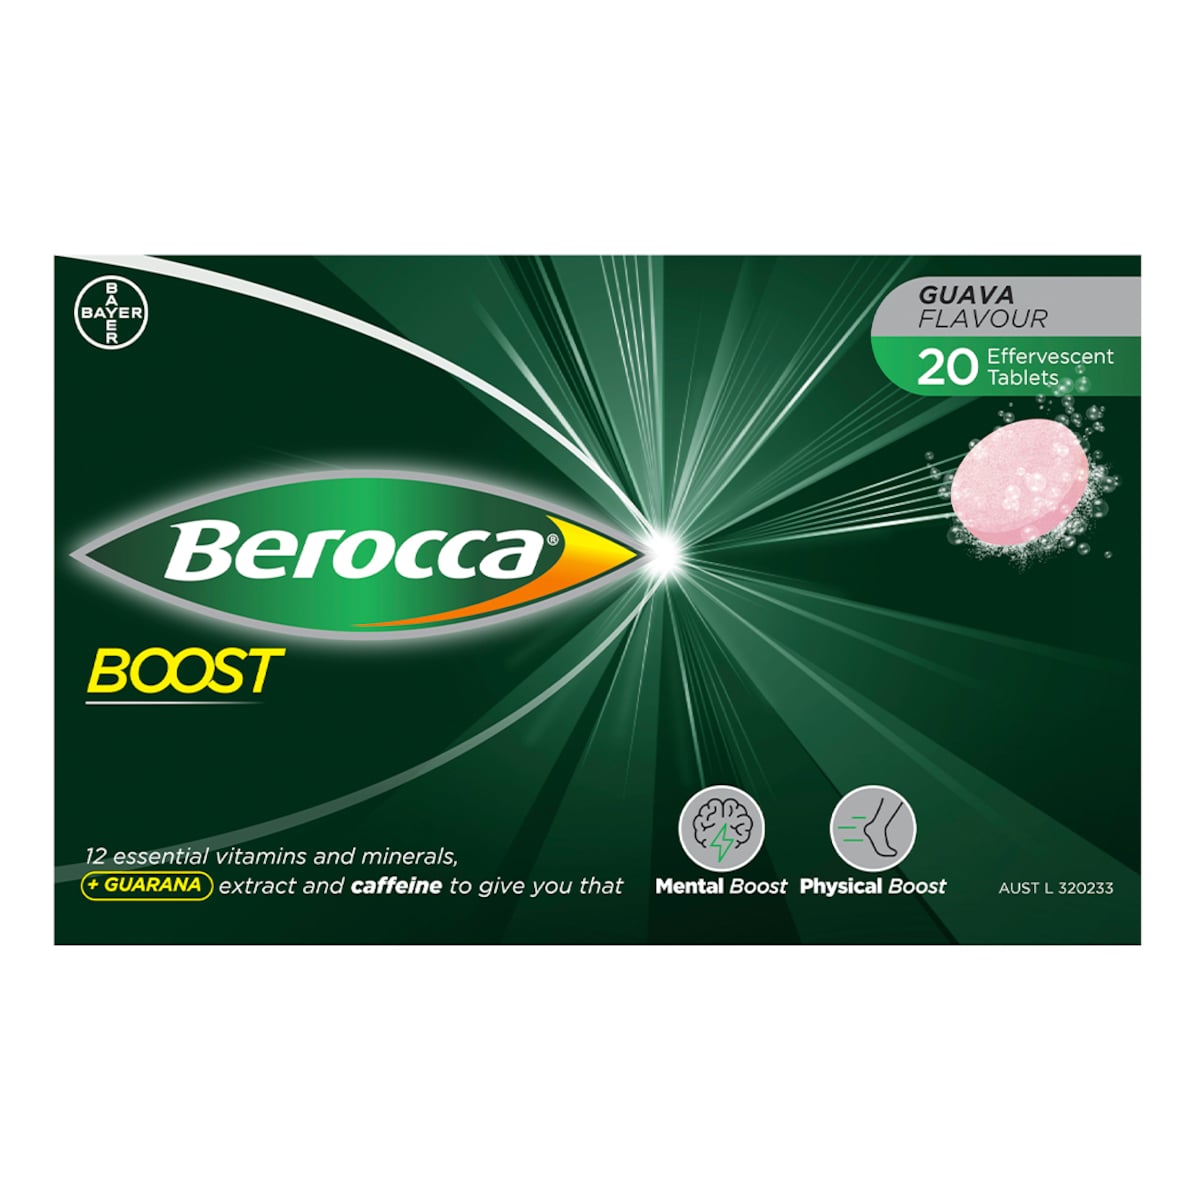 Berocca Boost 20 Effervescent Tablets Australia